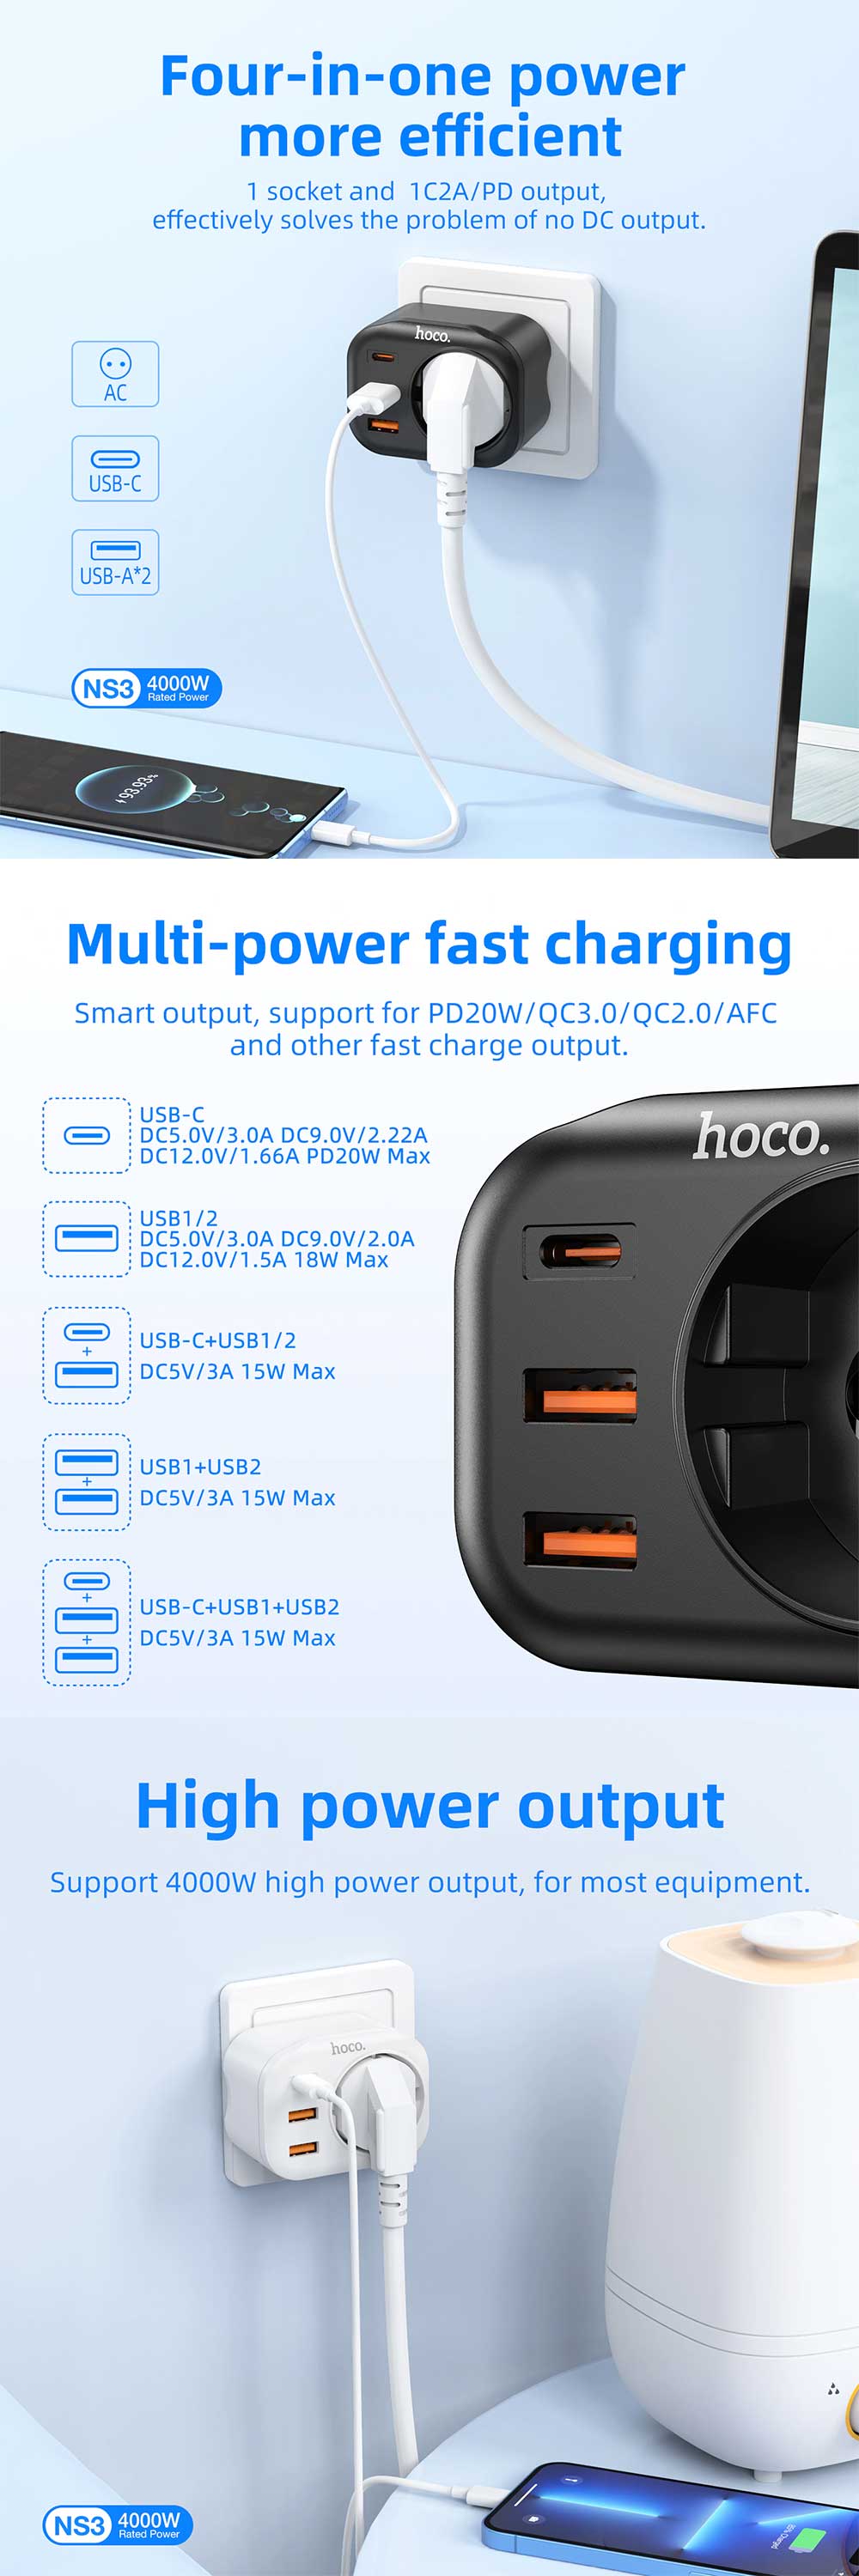 Hoco NS3 Multifunctional Socket EU Plug 4